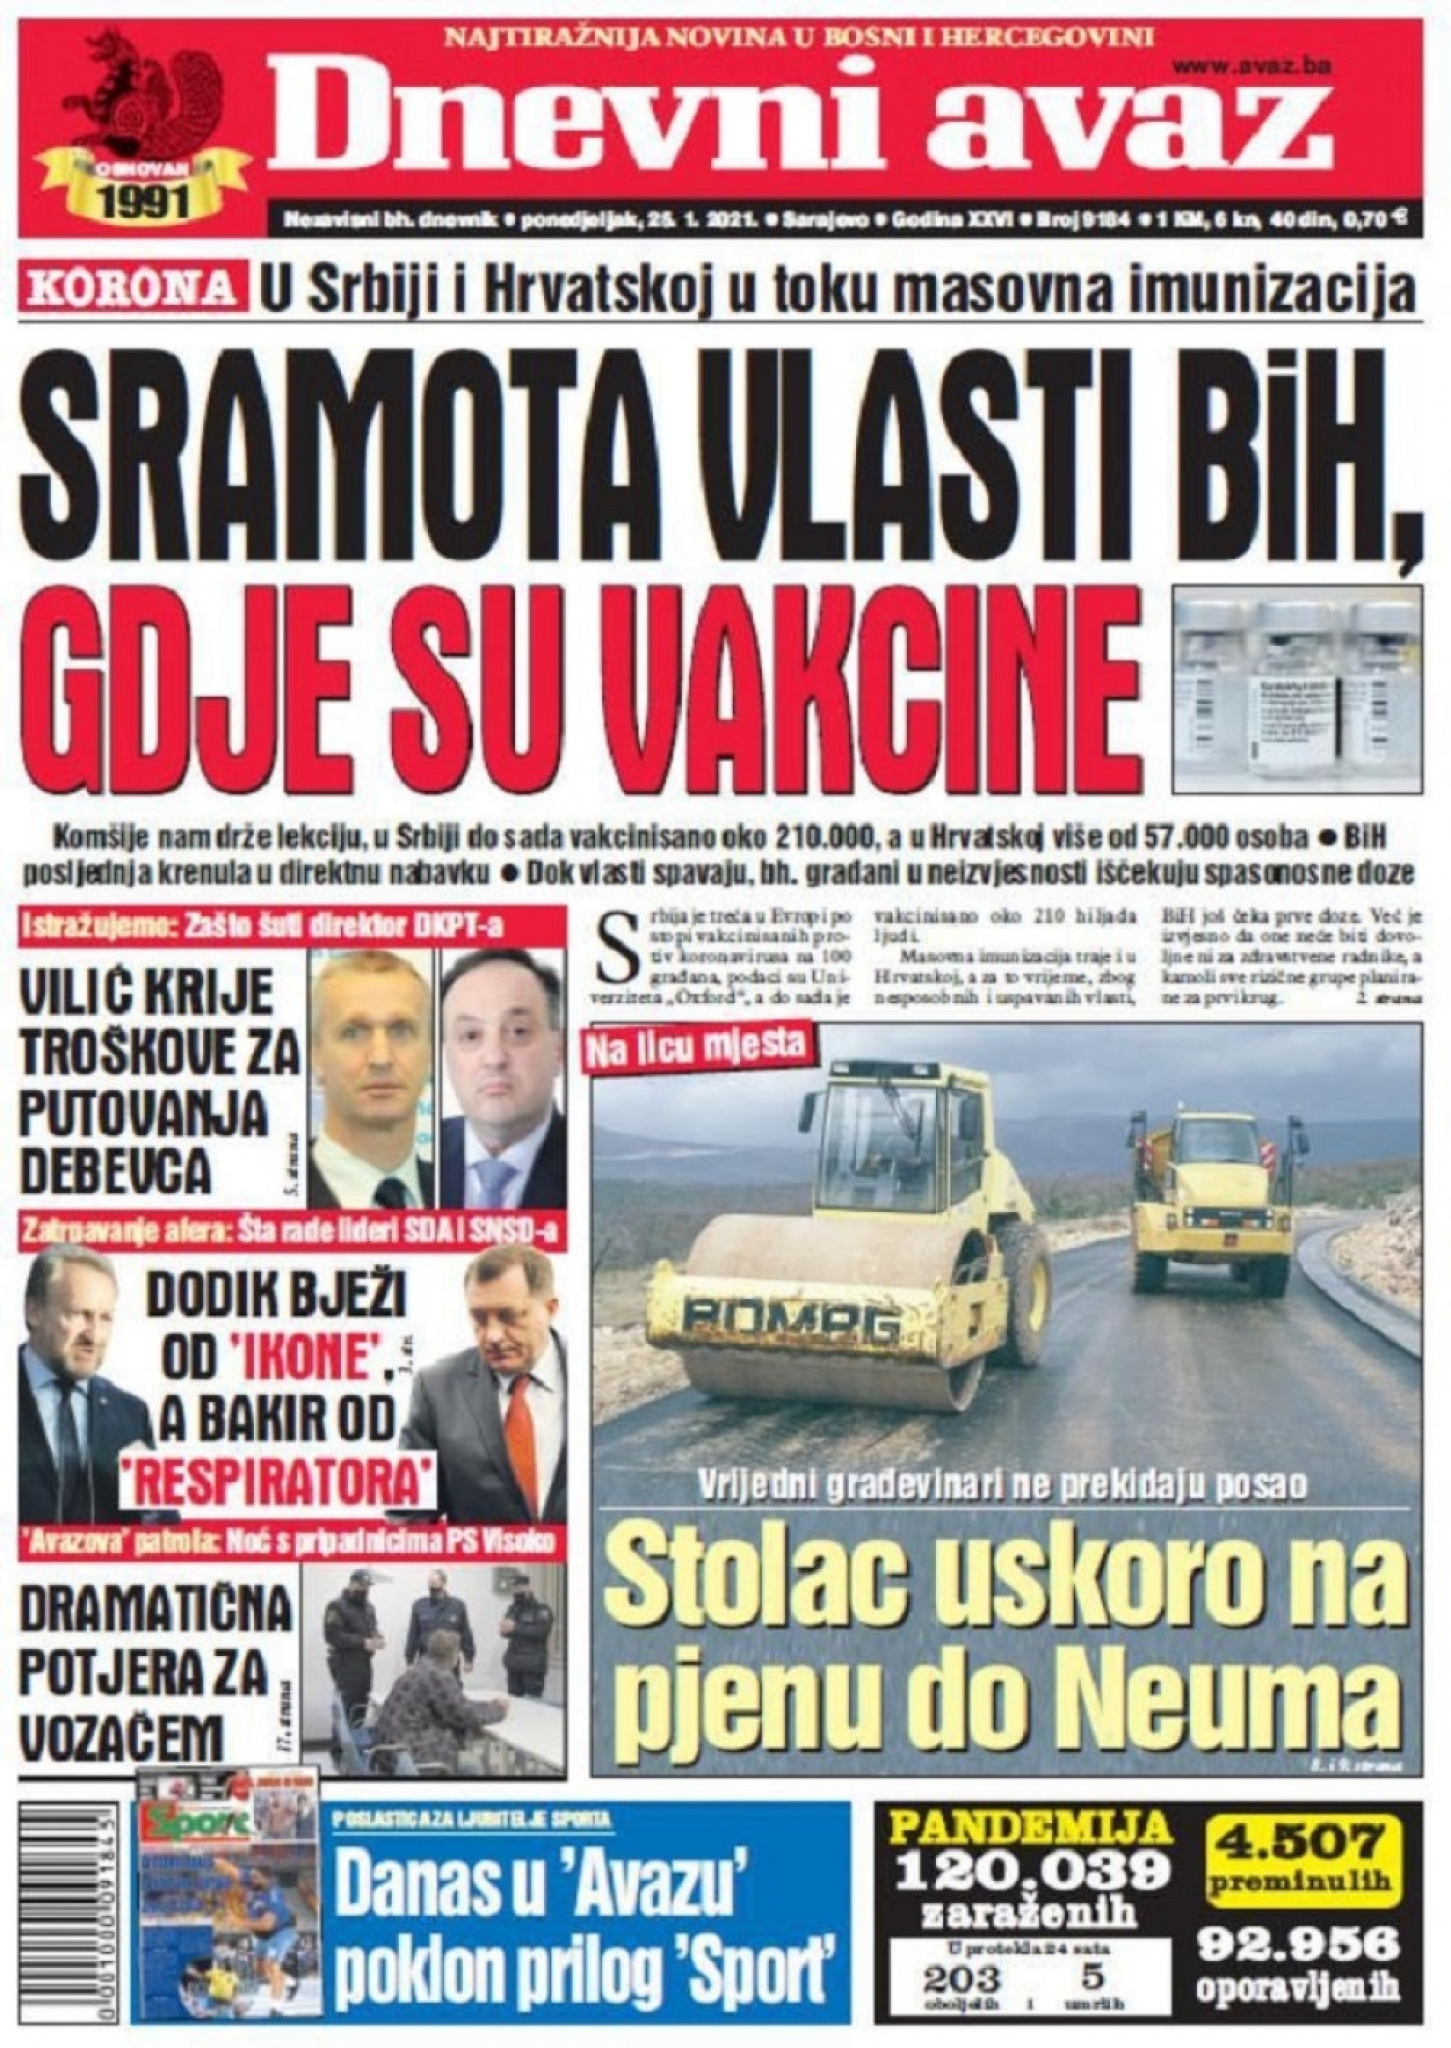 Bosanski mediji